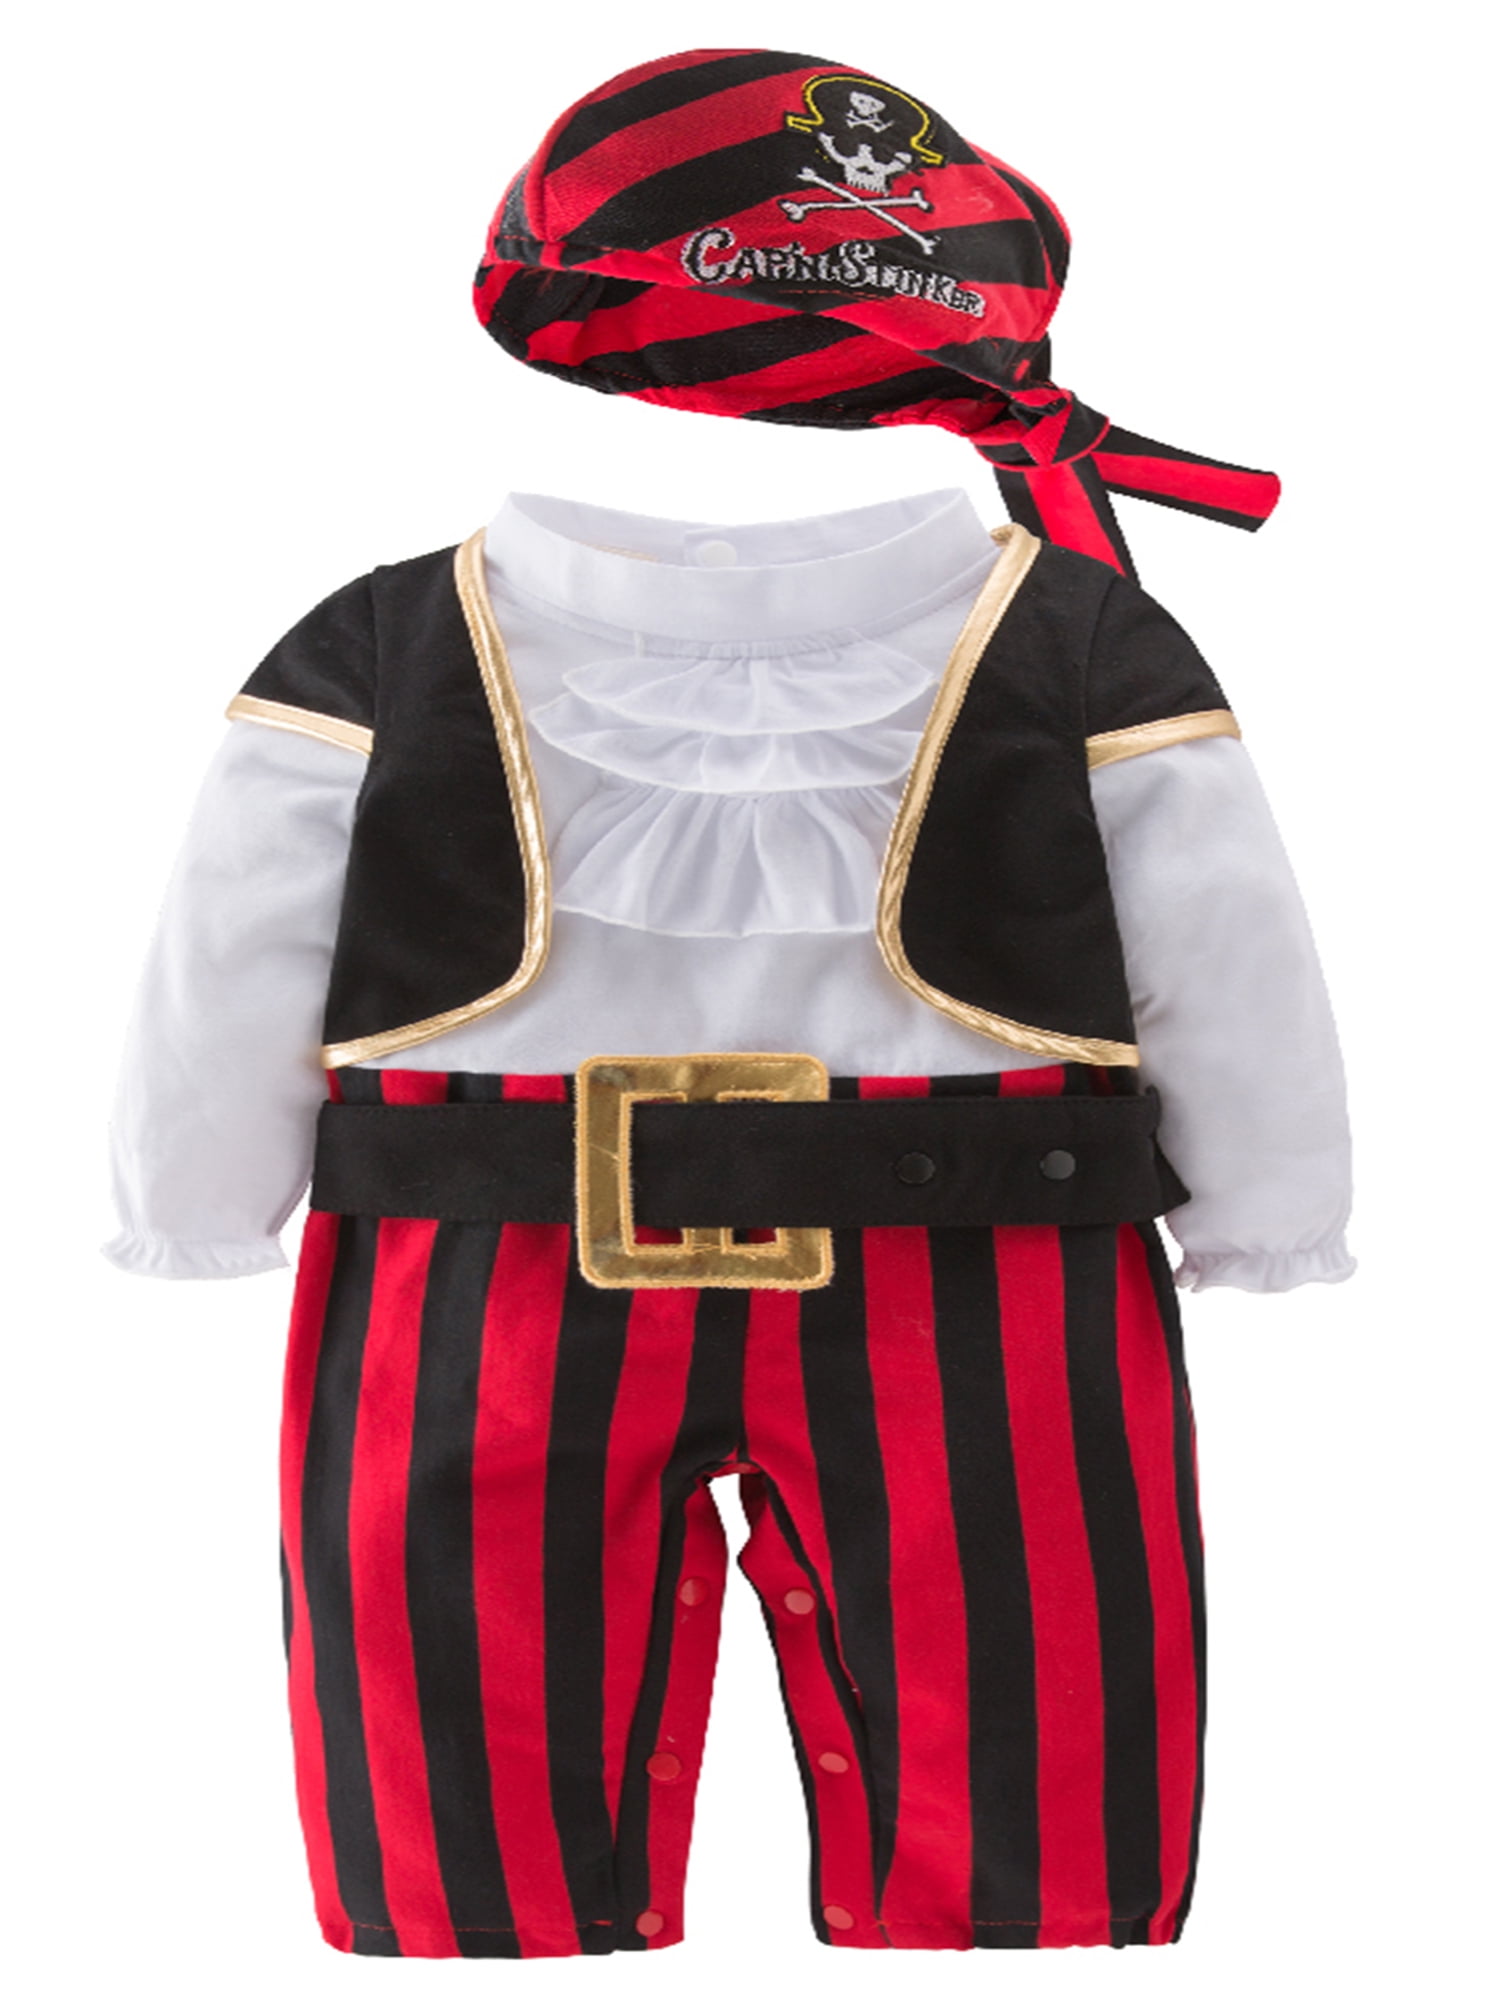 Brand New Pirate Cap/'n Stinker Infant//Toddler Halloween Costume